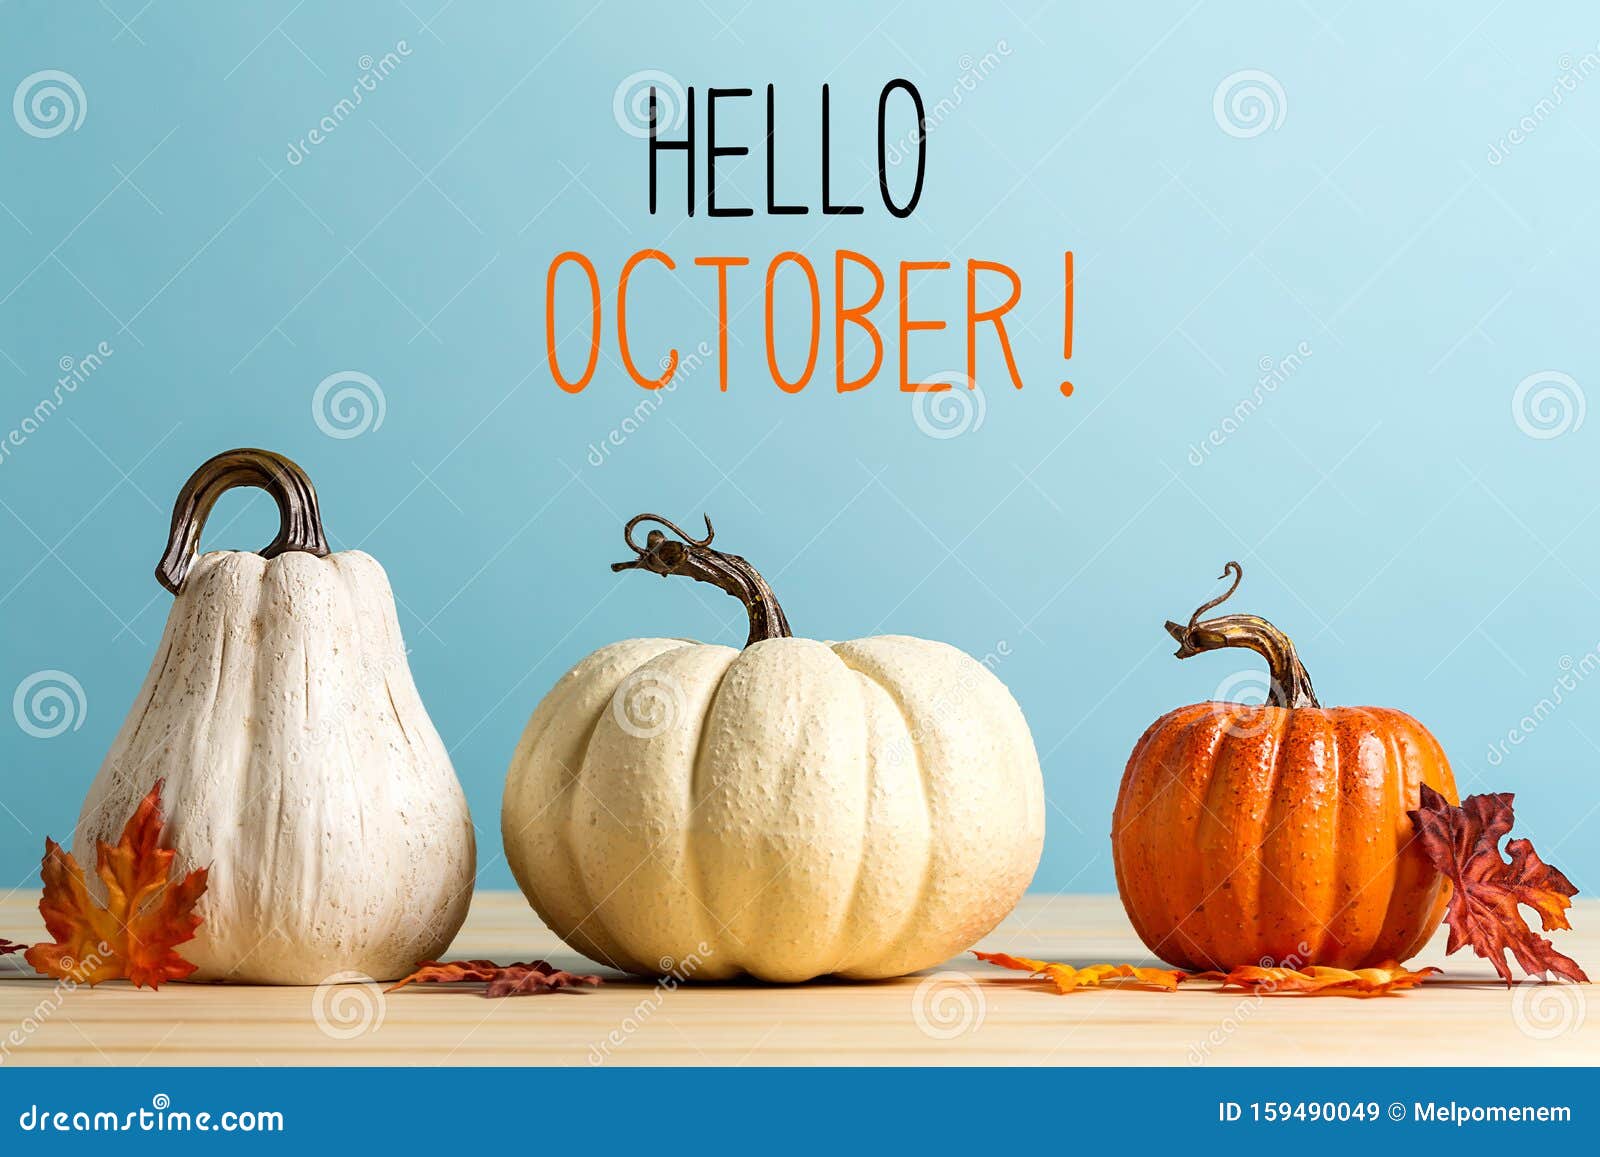 hello october message with pumpkins